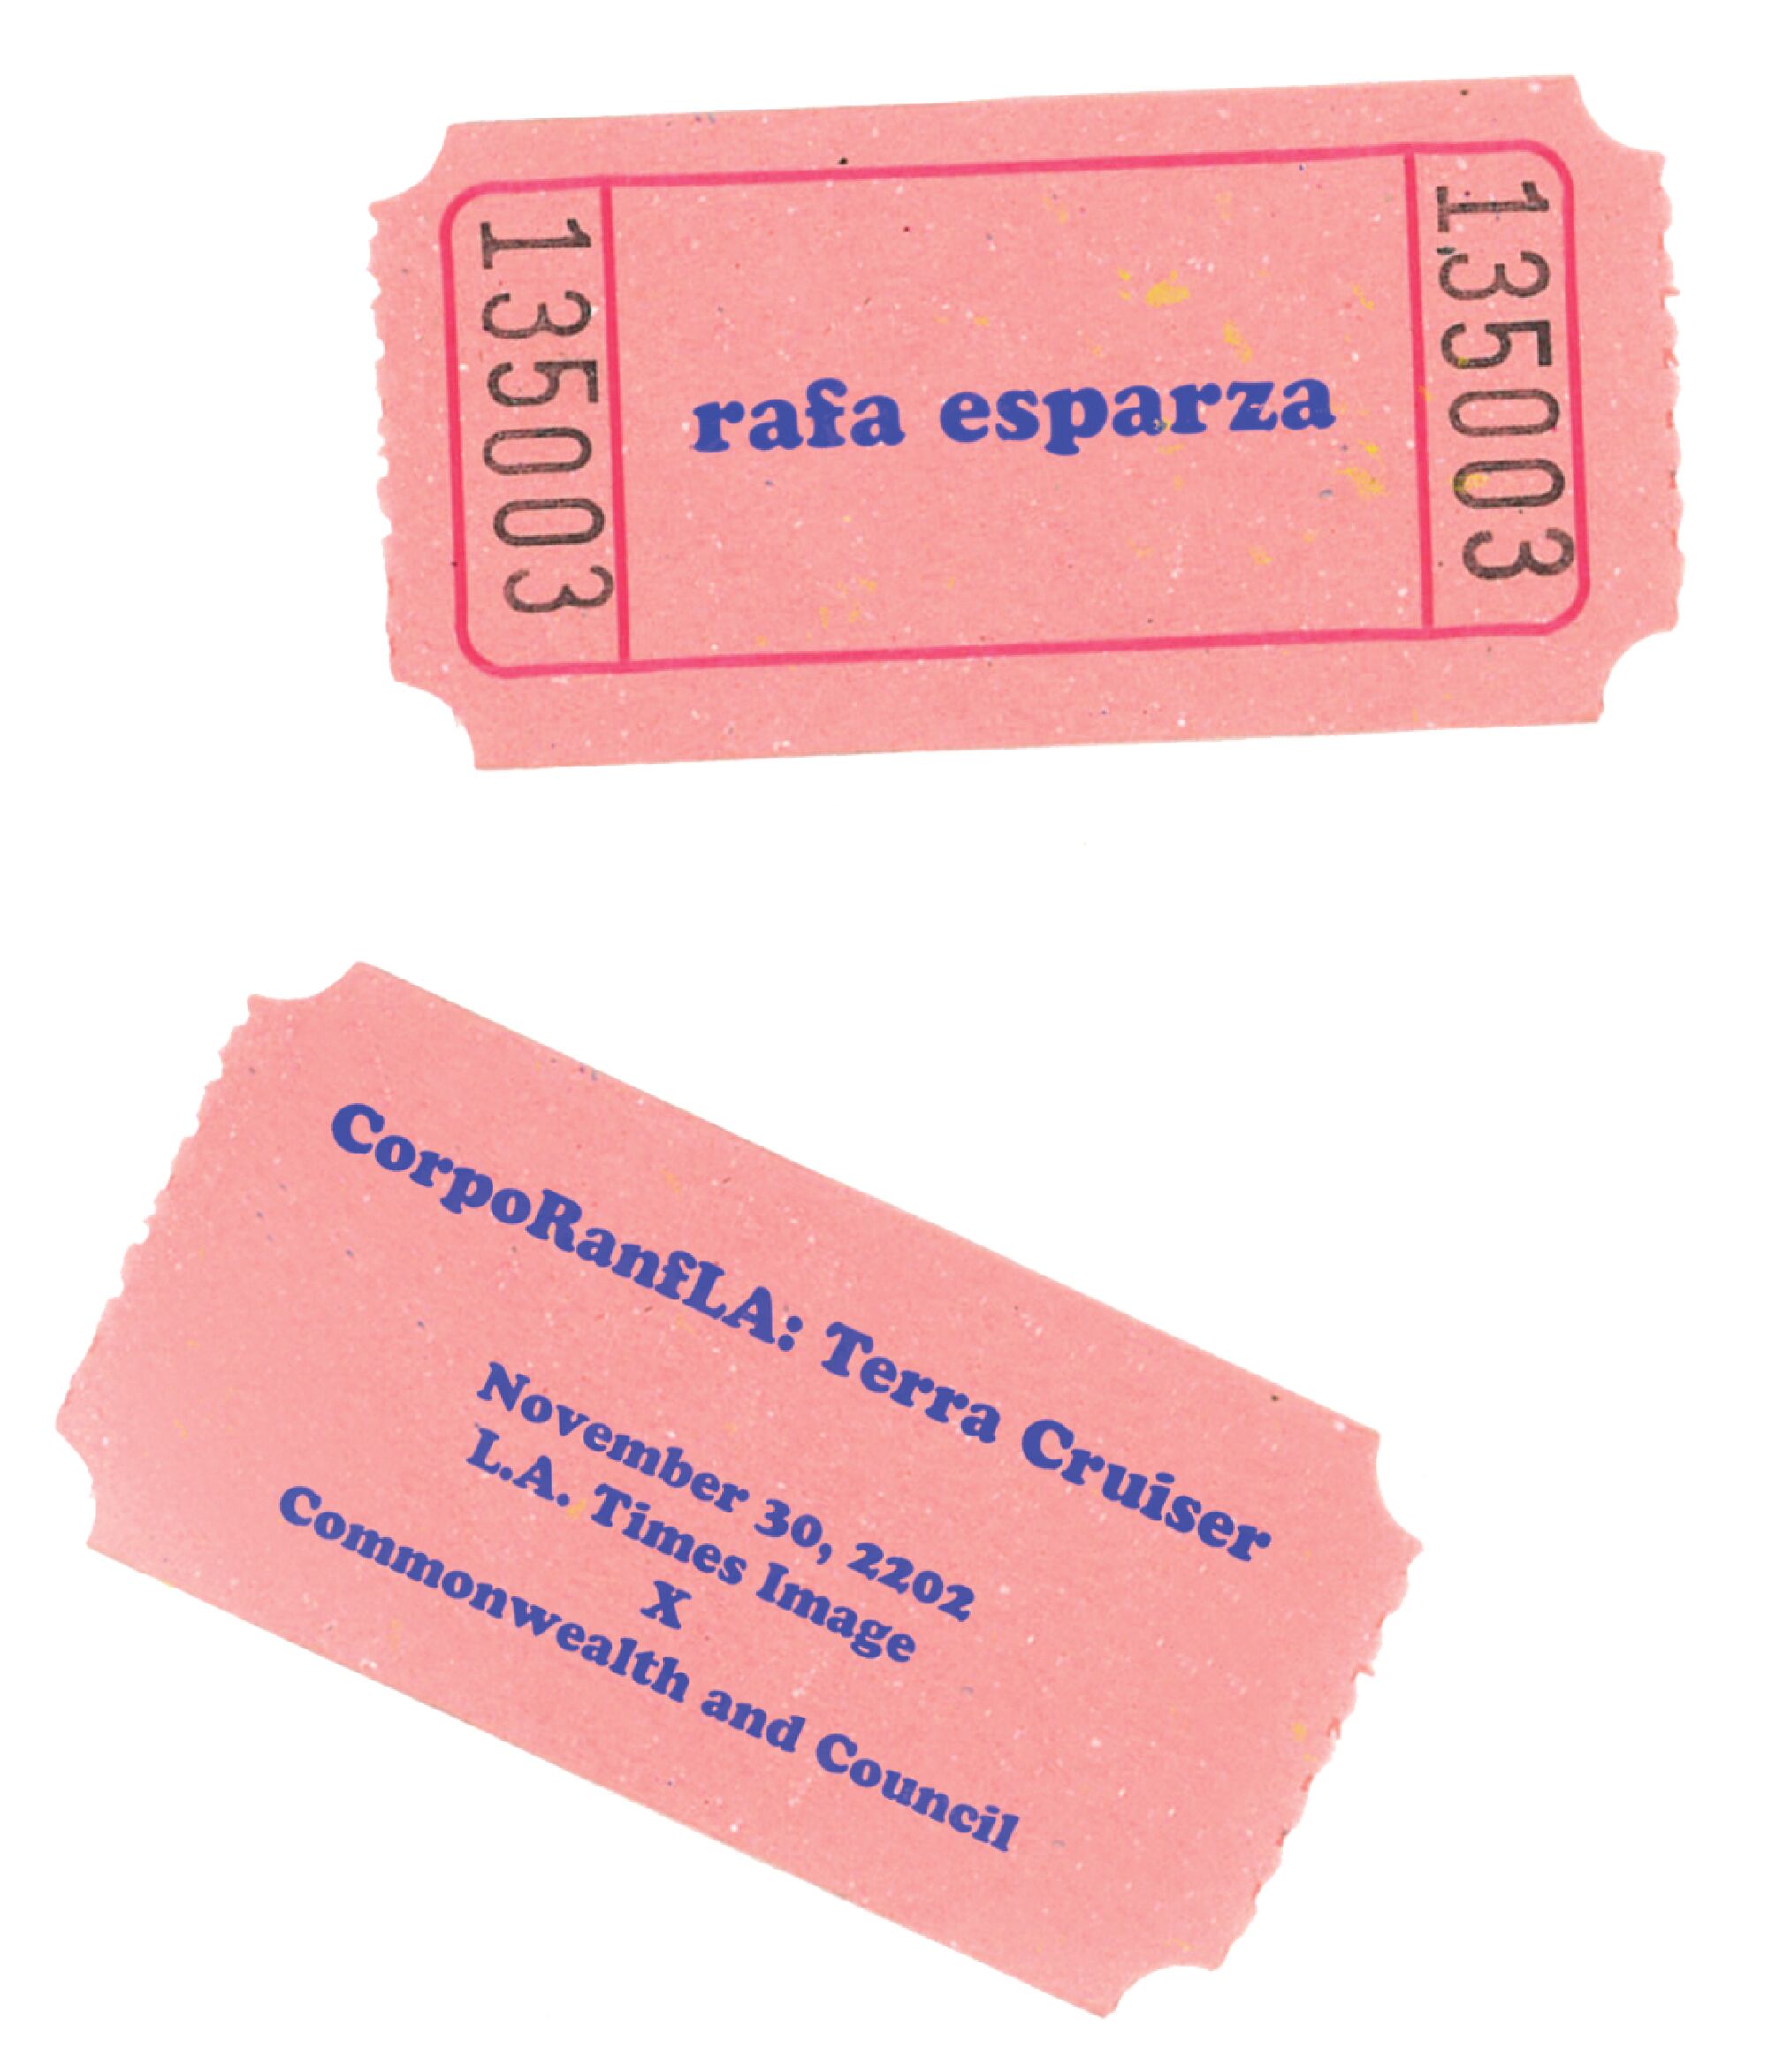 Ticket created for CorpoRanflLA: Terra Cruiser, art by rafa esparza